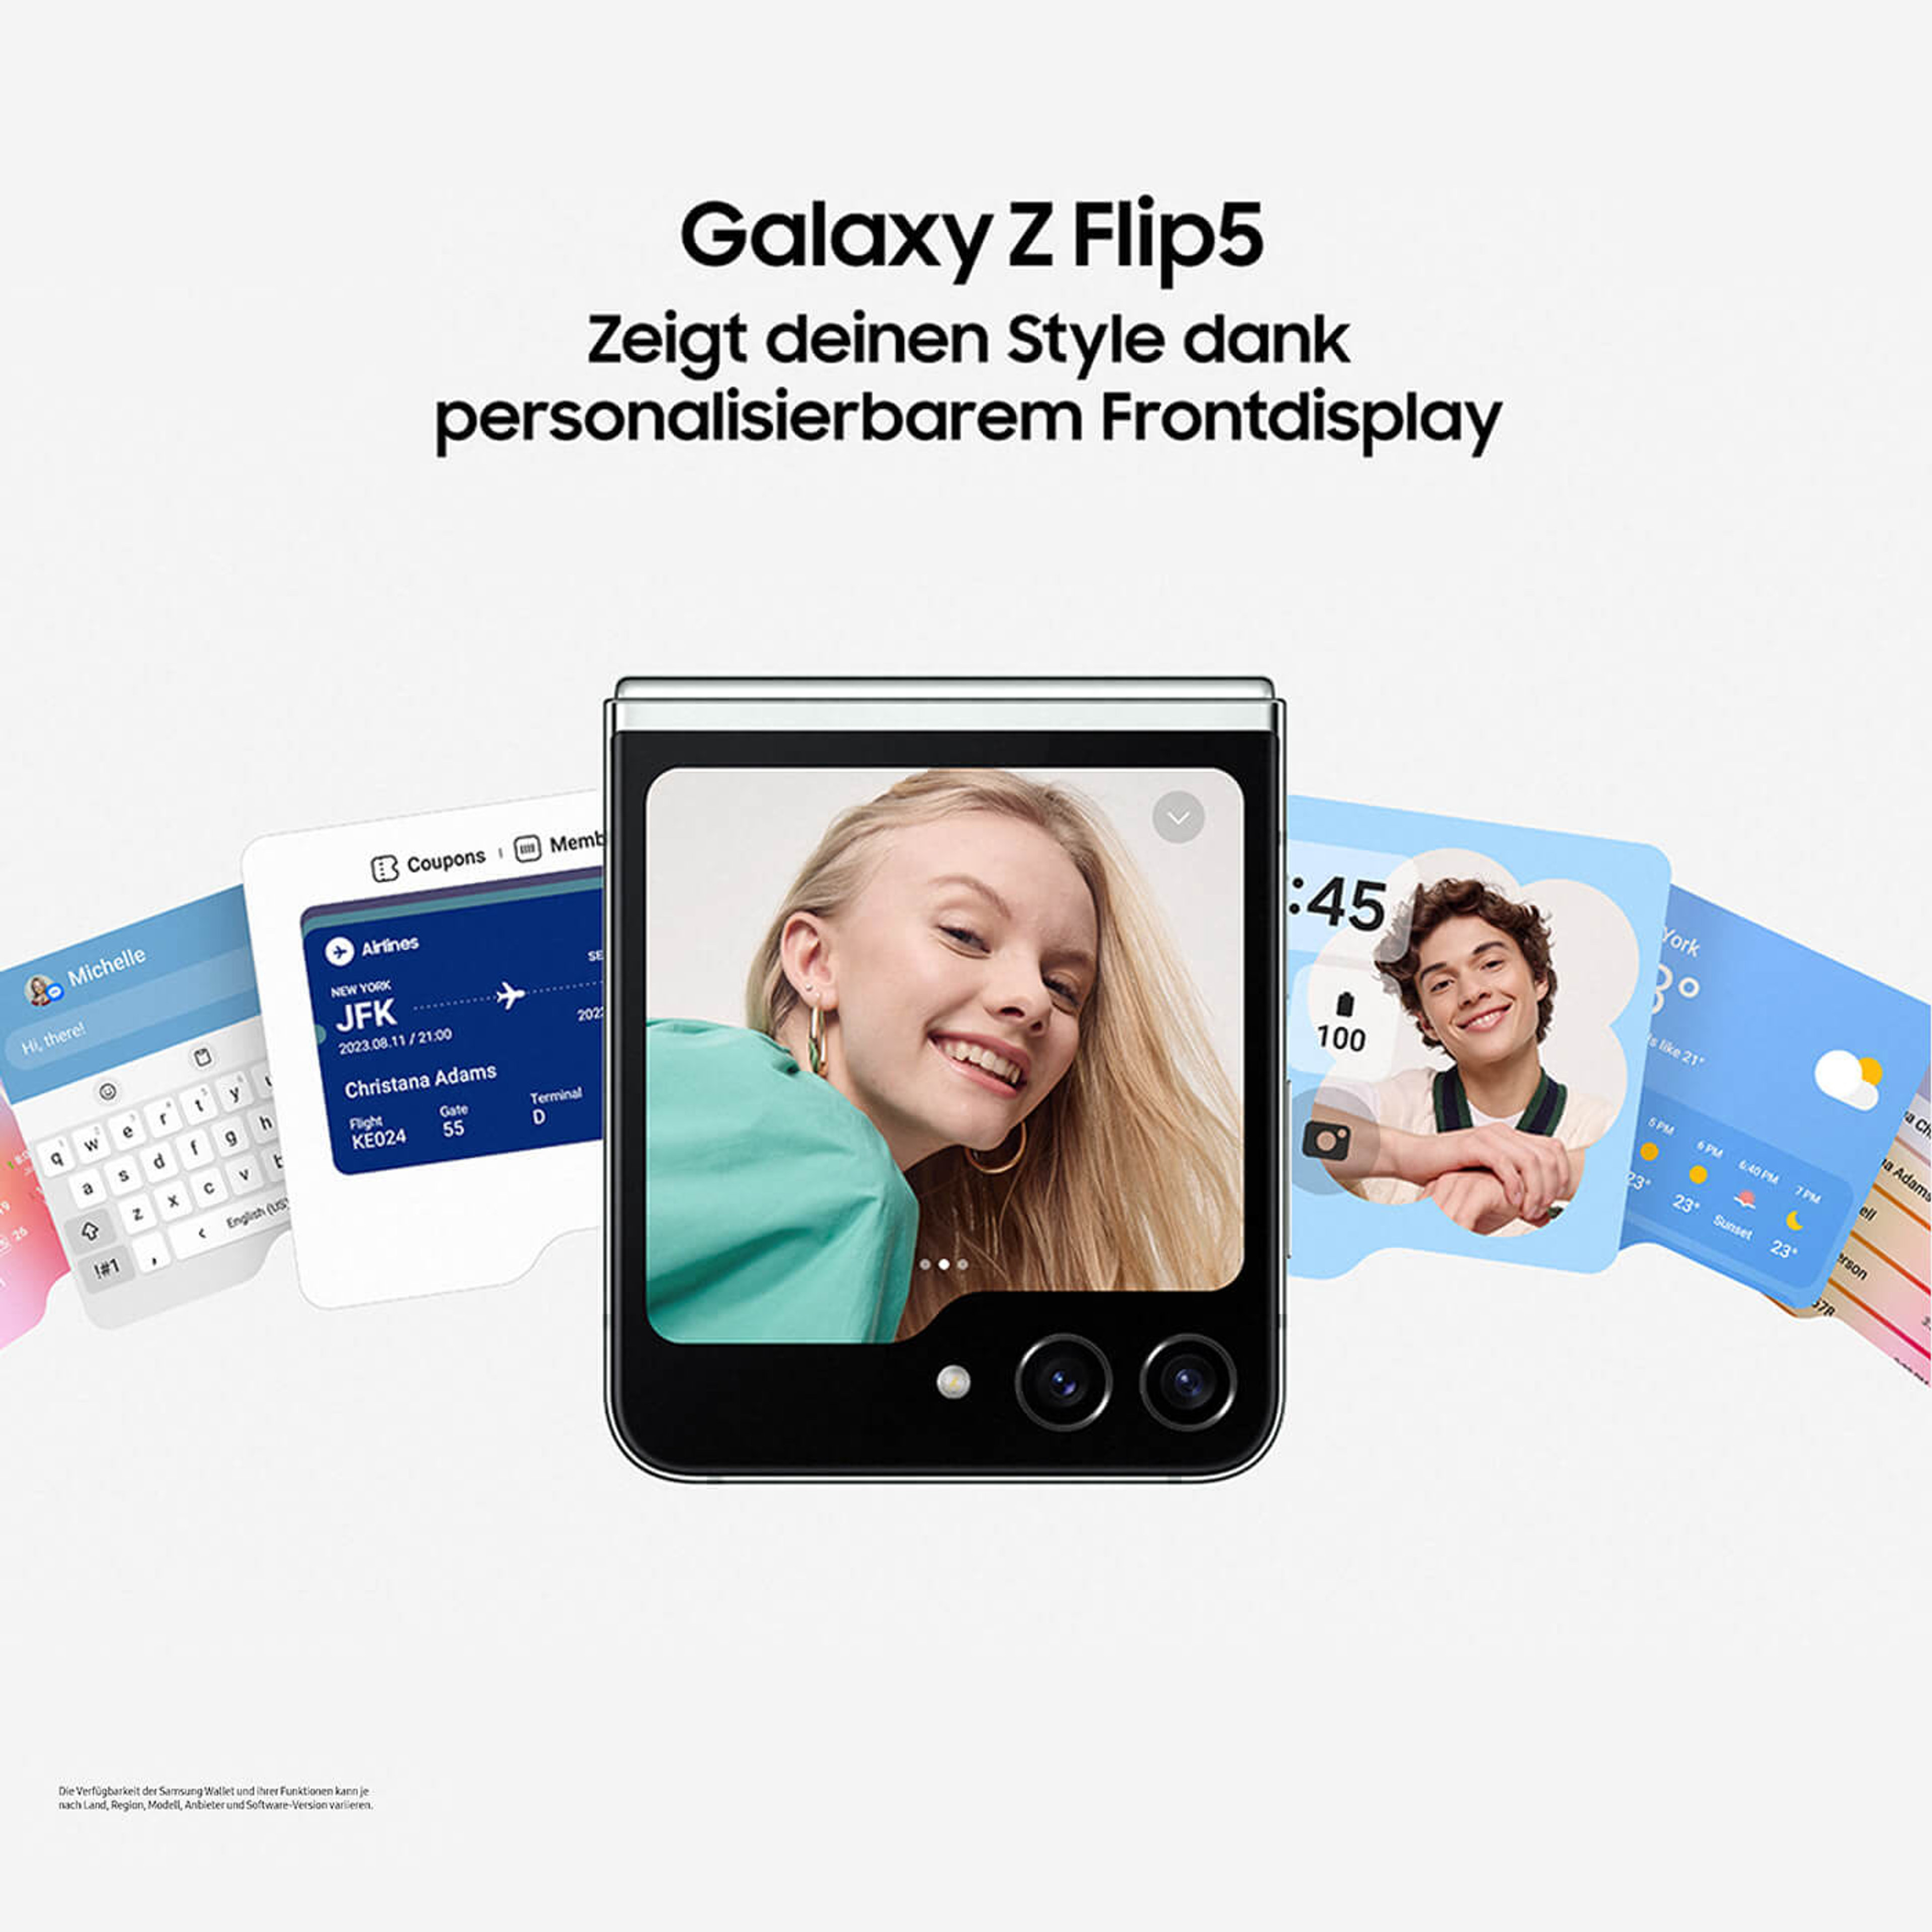 Samsung Galaxy Z Flip 5 Frontdisplay